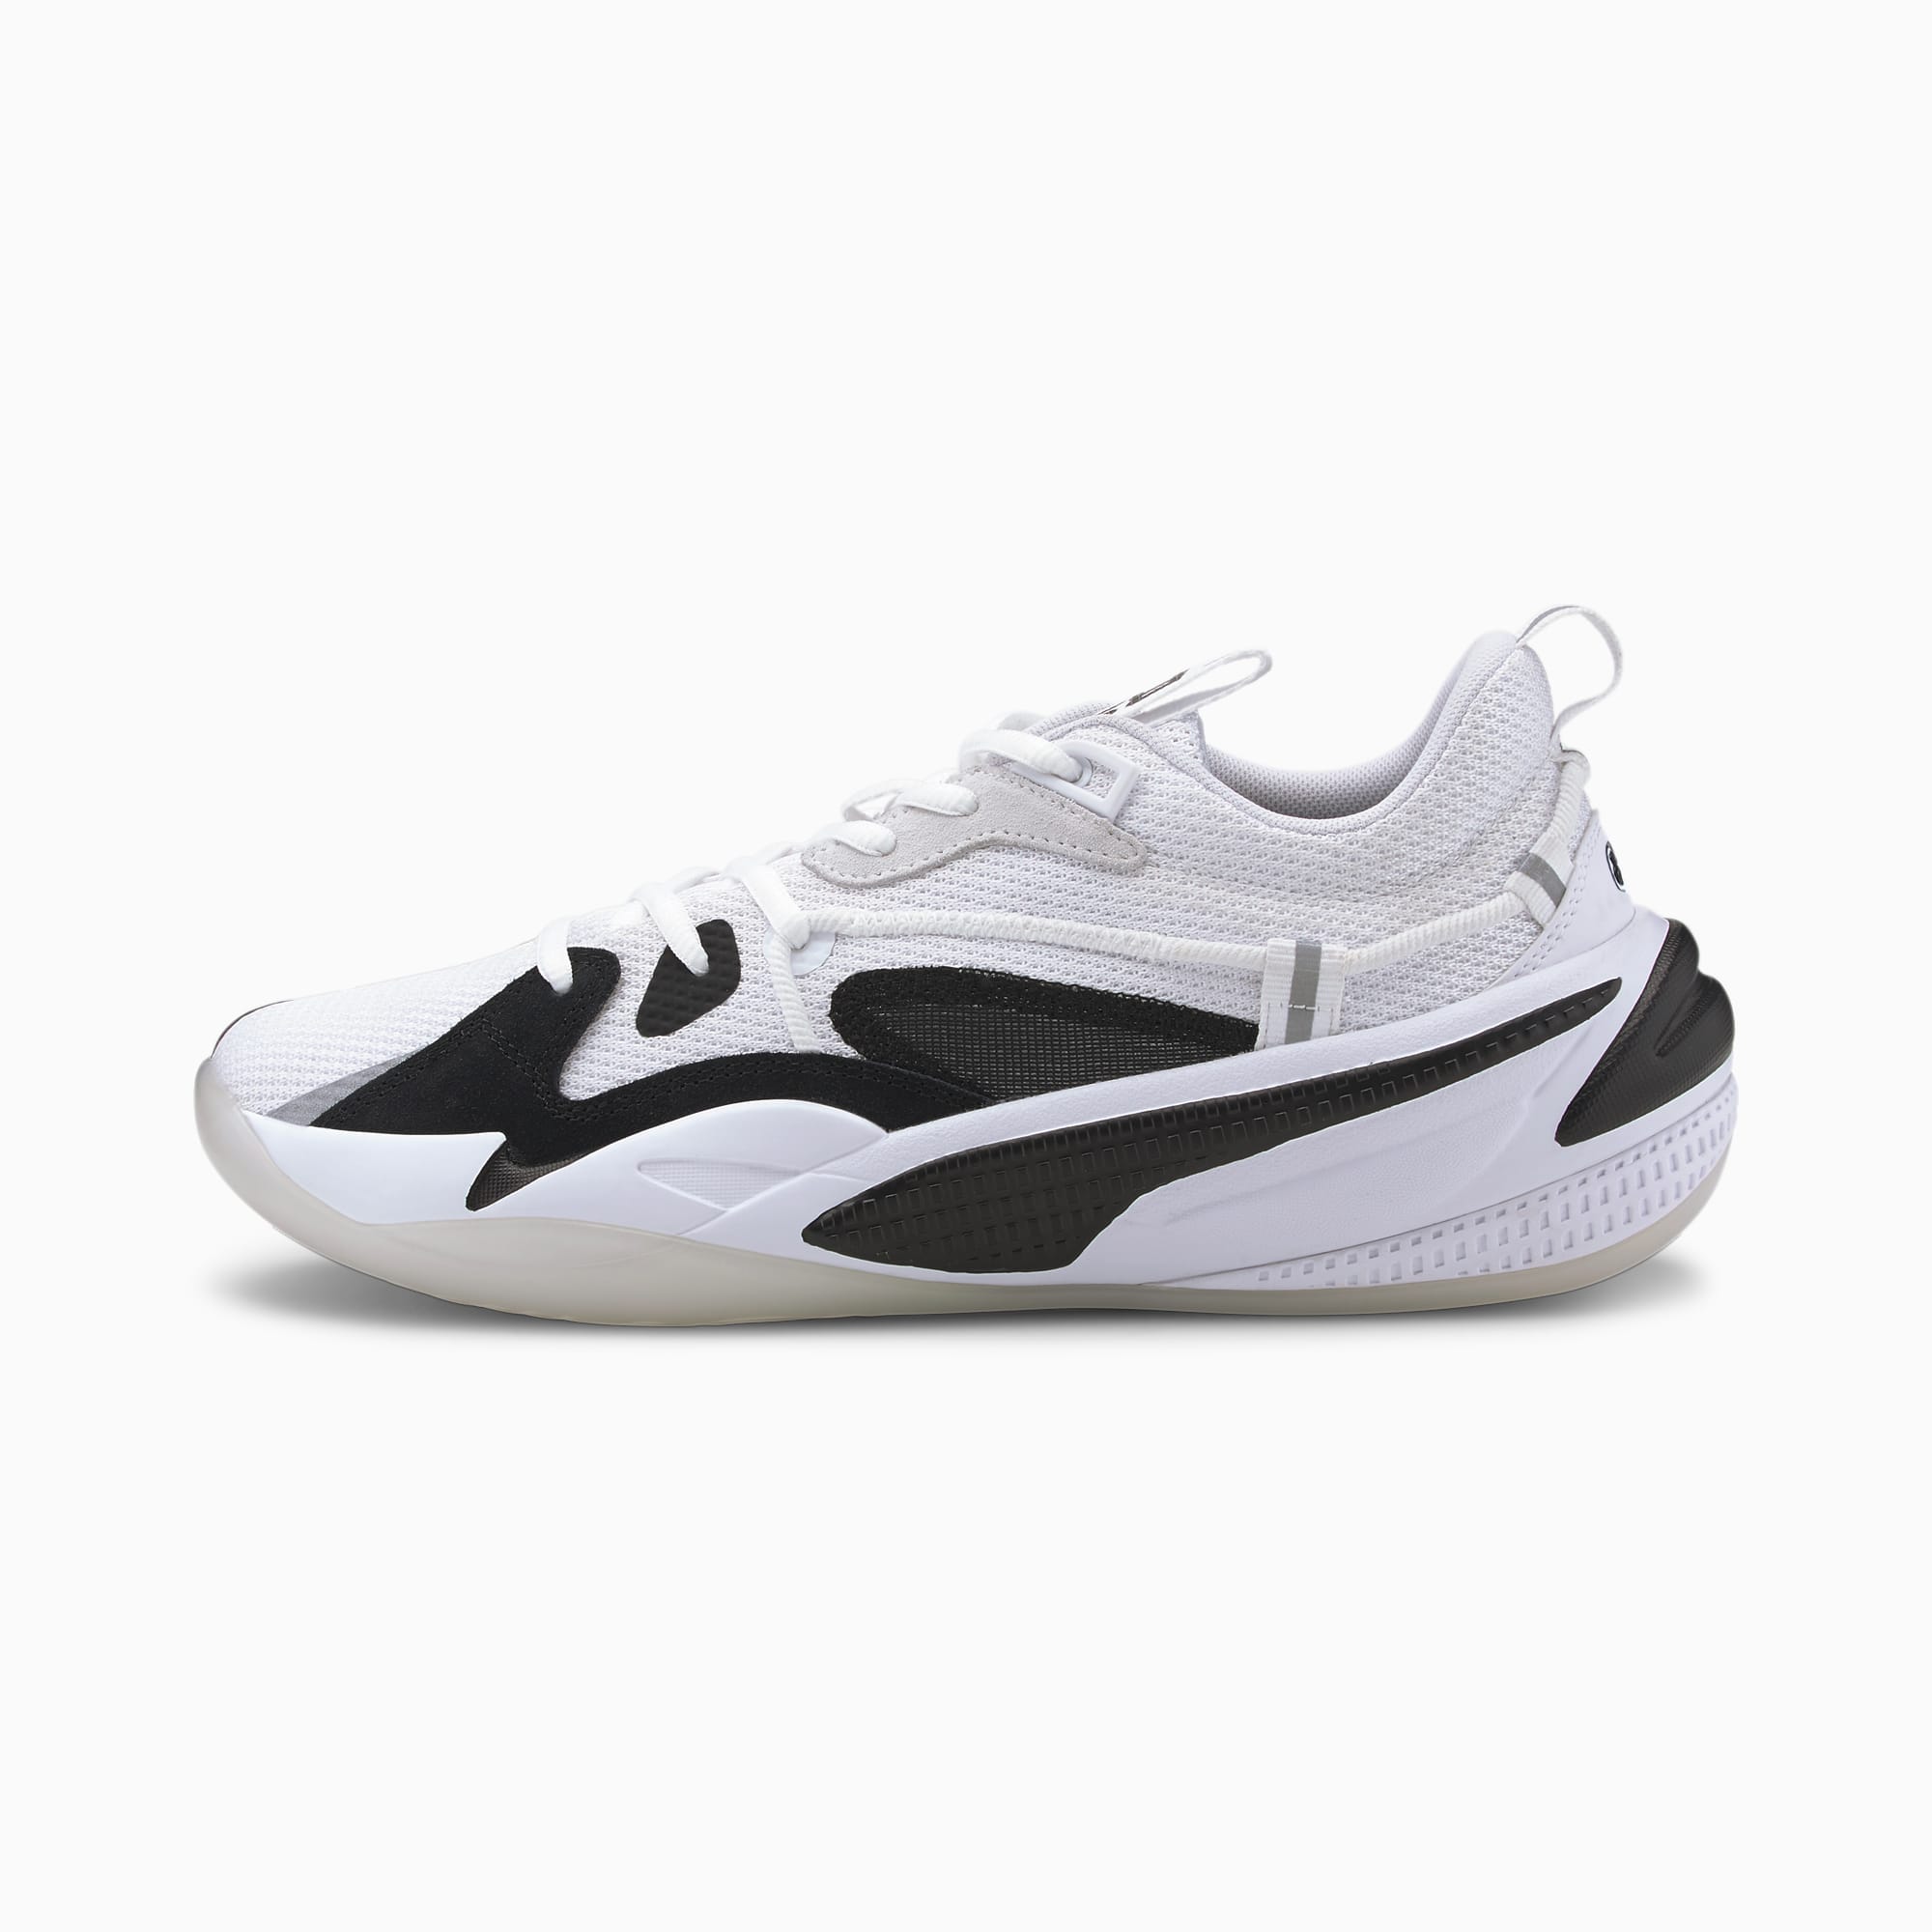 puma black and white tennis shoes